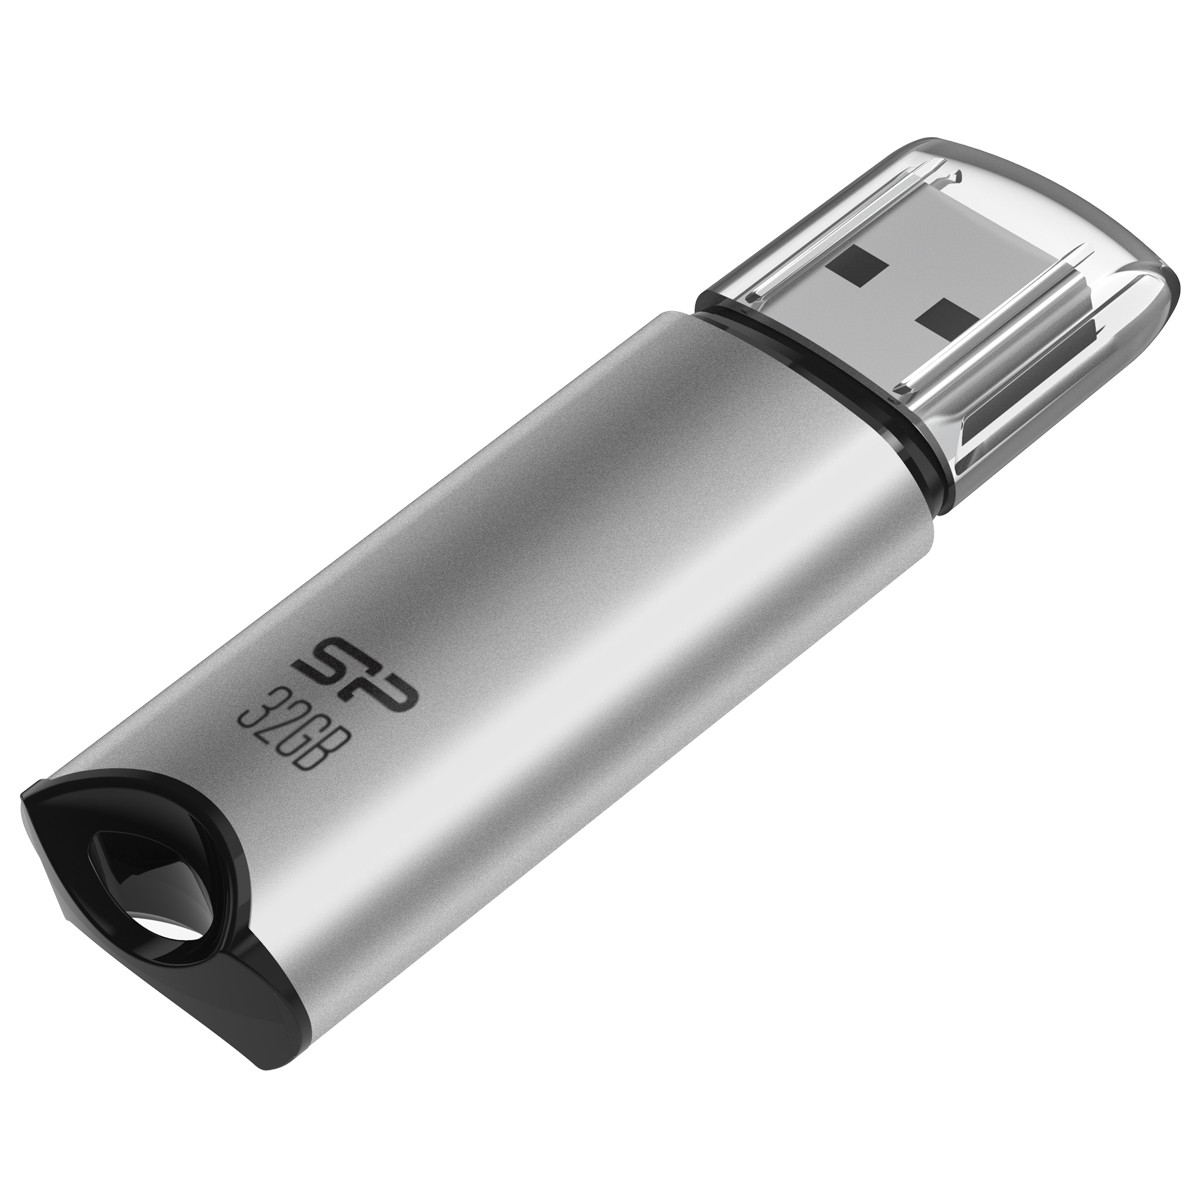 Silicon Power 32GB Marvel M02 USB 3.0 Flash Drive - Silver